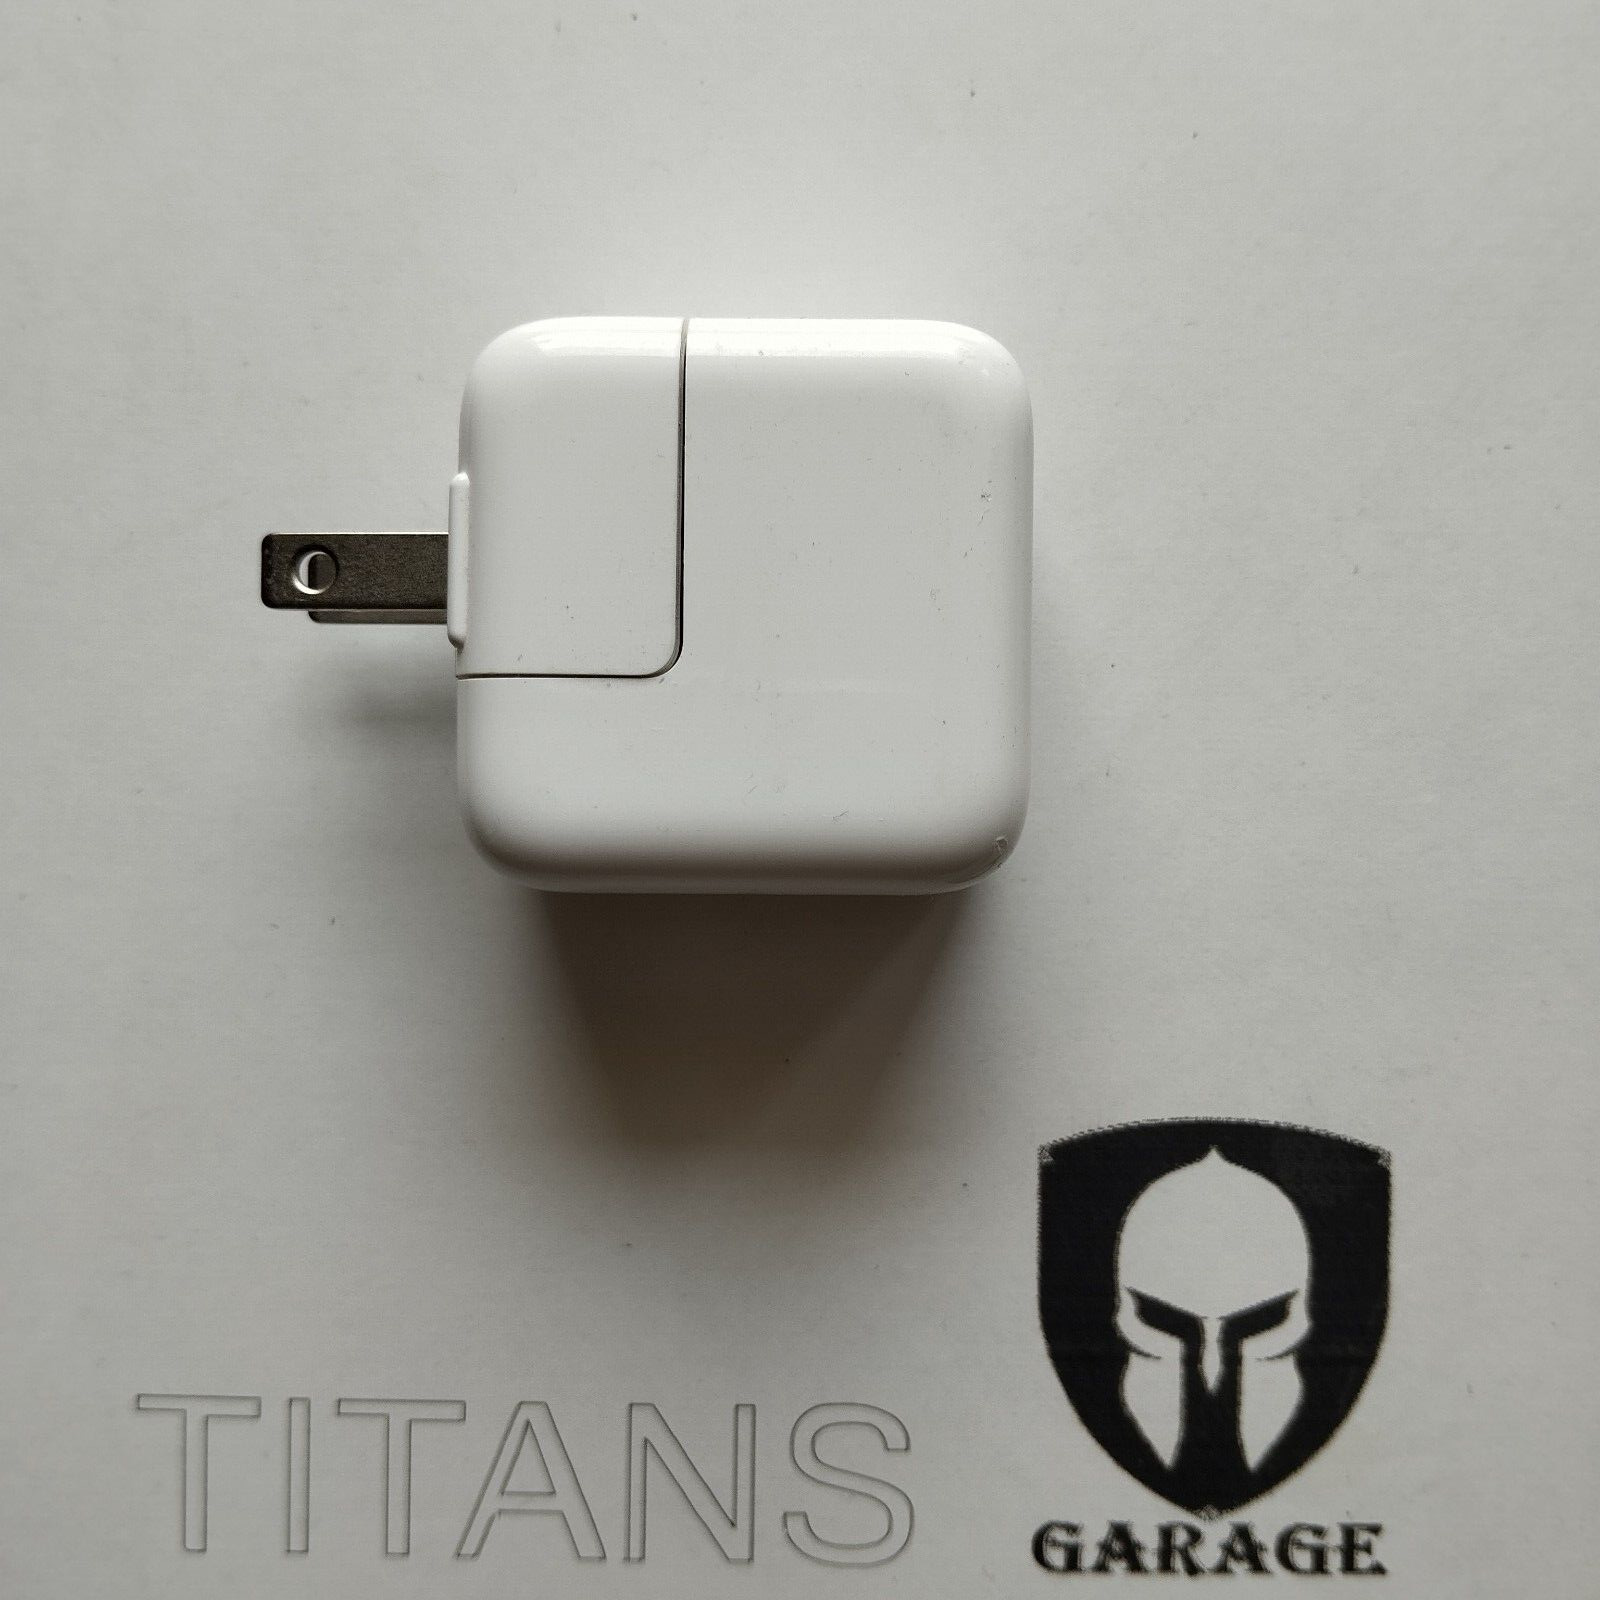 Genuine Apple 12W USB Mains Charger Plug A1401 for iPhone iPad iPod - USA Plug